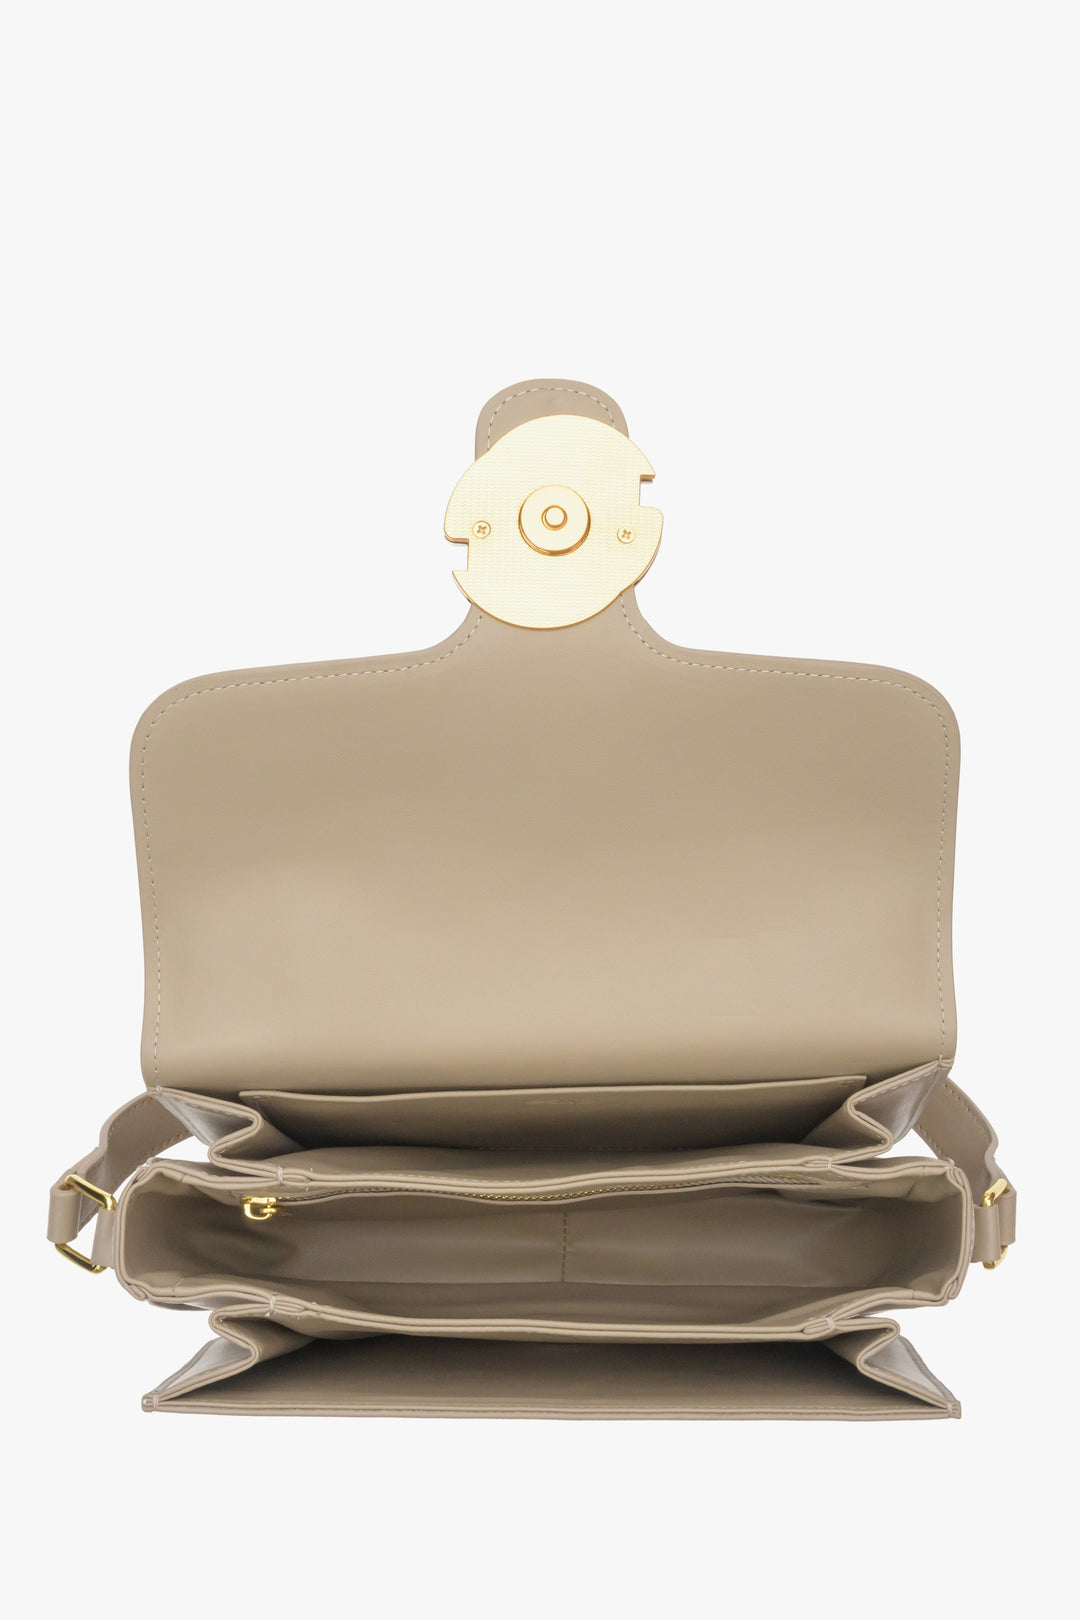 Women's grey and beige small handbag - inside of the bag.